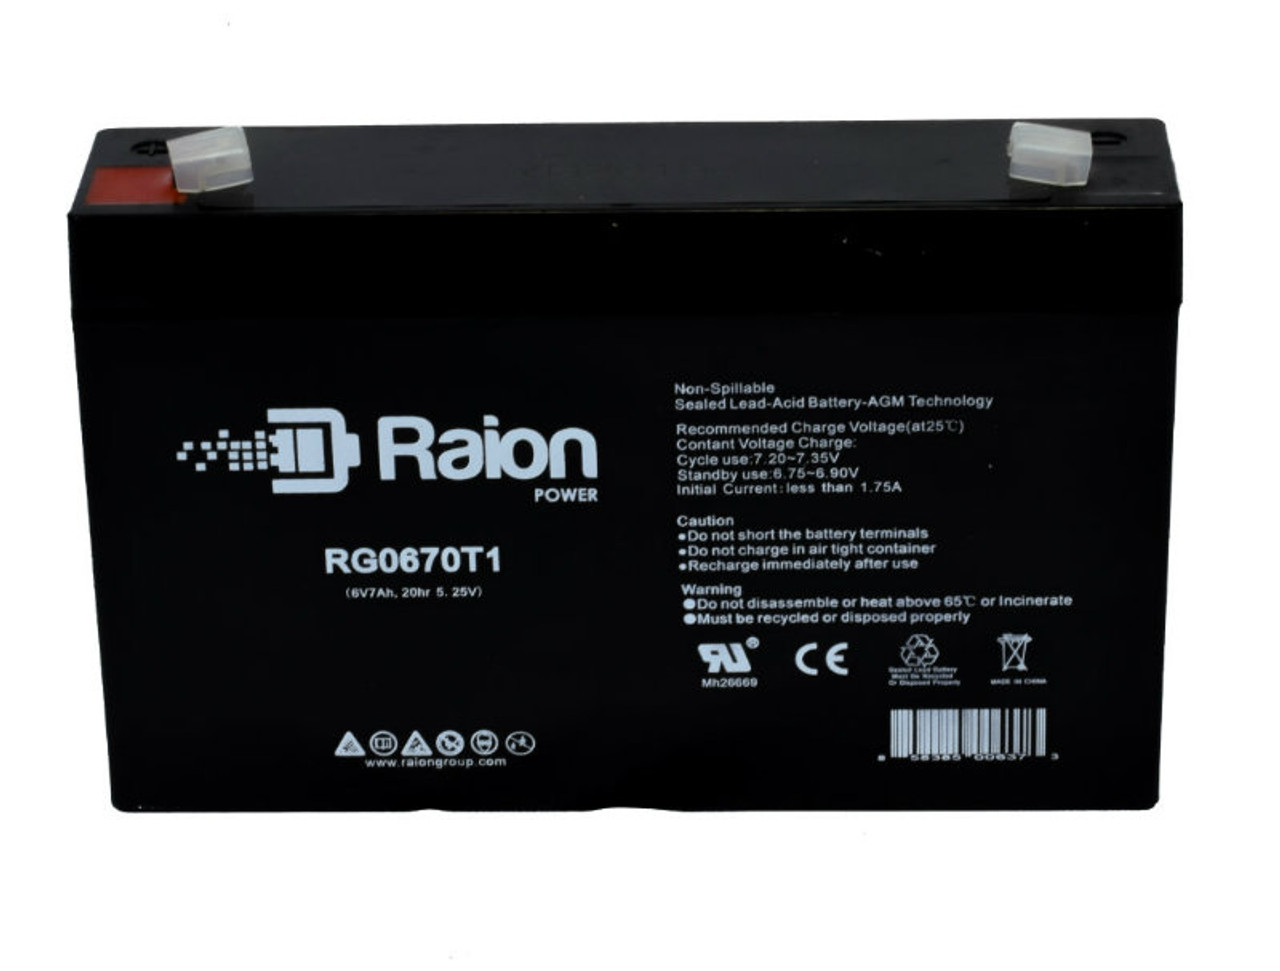 Raion Power RG0670T1 Replacement Battery Cartridge for Sonnenschein N67IWC